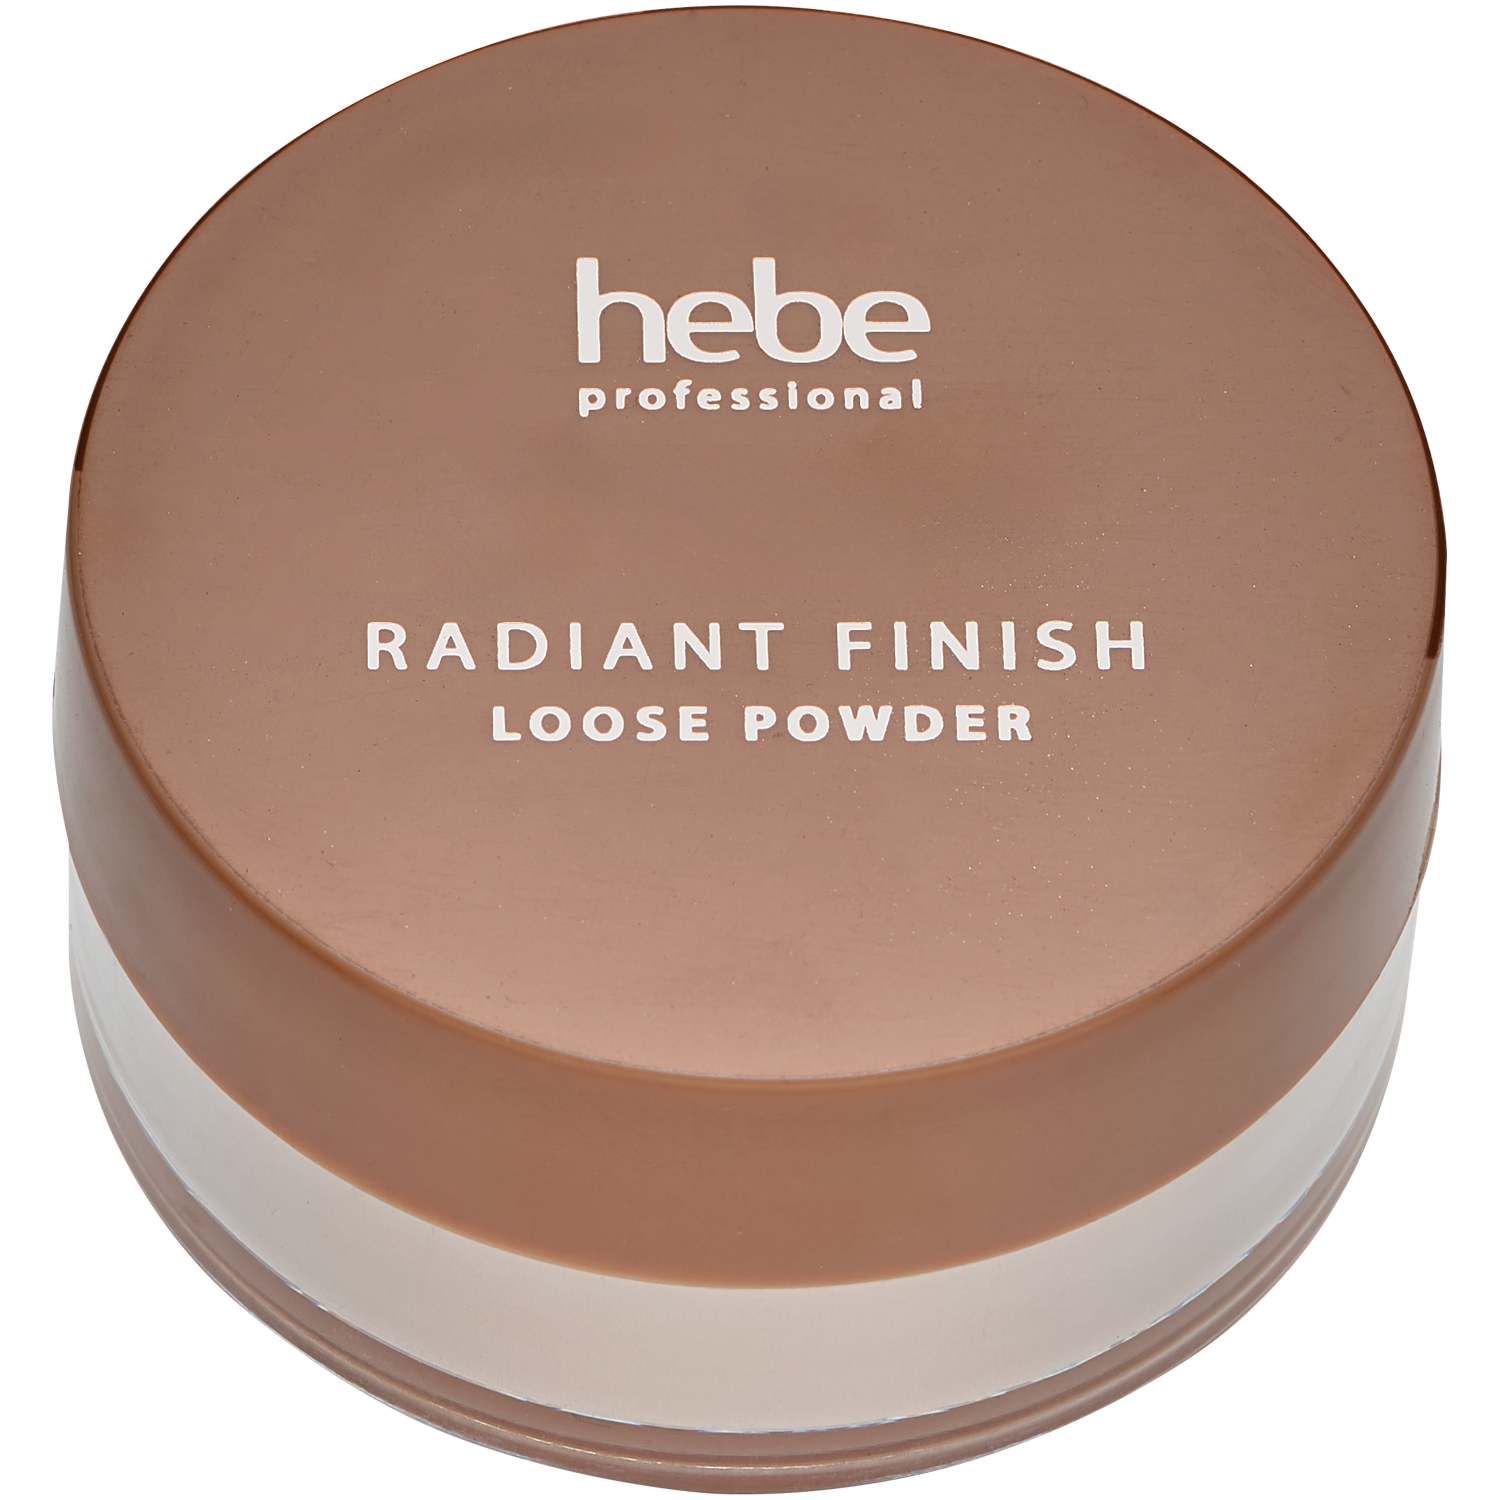 Осветляющая рассыпчатая пудра для лица Hebe Professional Radiant Finish Loose Powder, 7 гр цена и фото